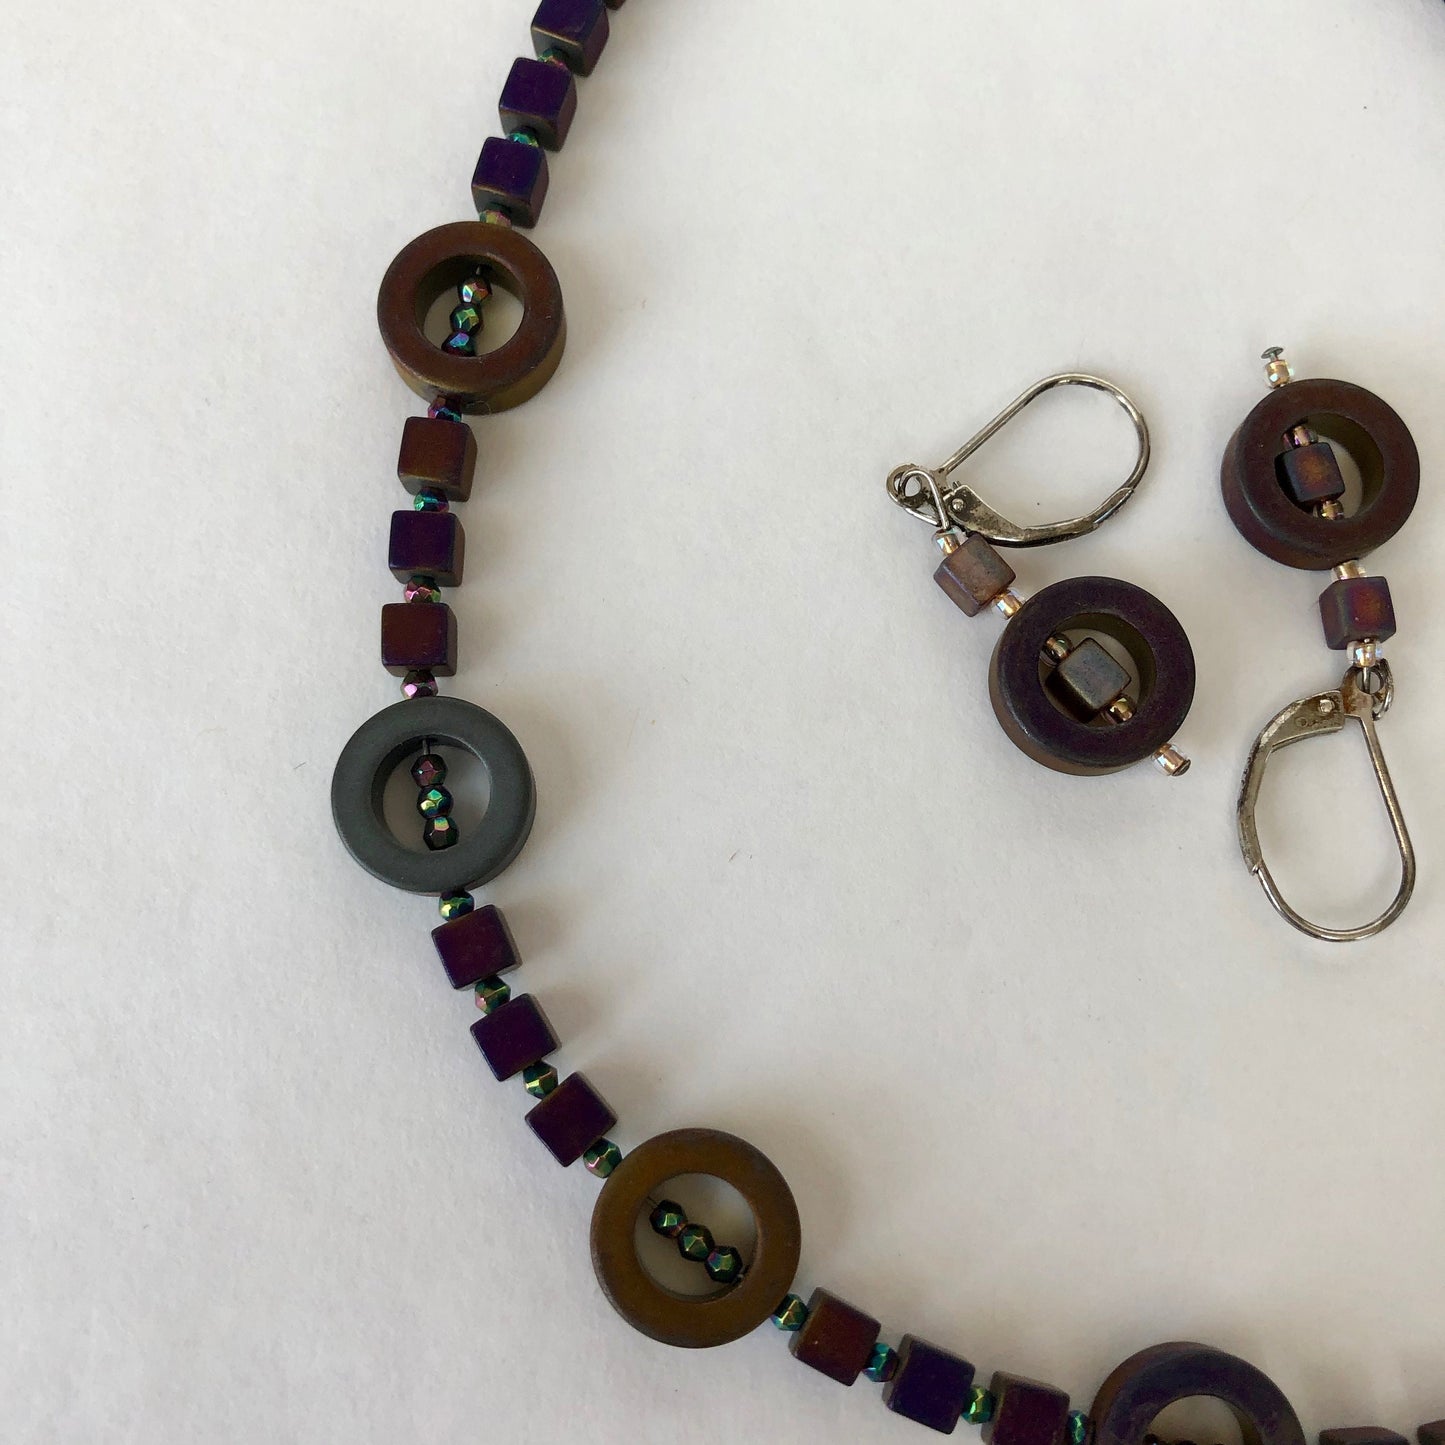 Striking and classy necklace, made of beautiful hematite stone beads. These dark purple stones, radiate with a slight aurora borealis tint.